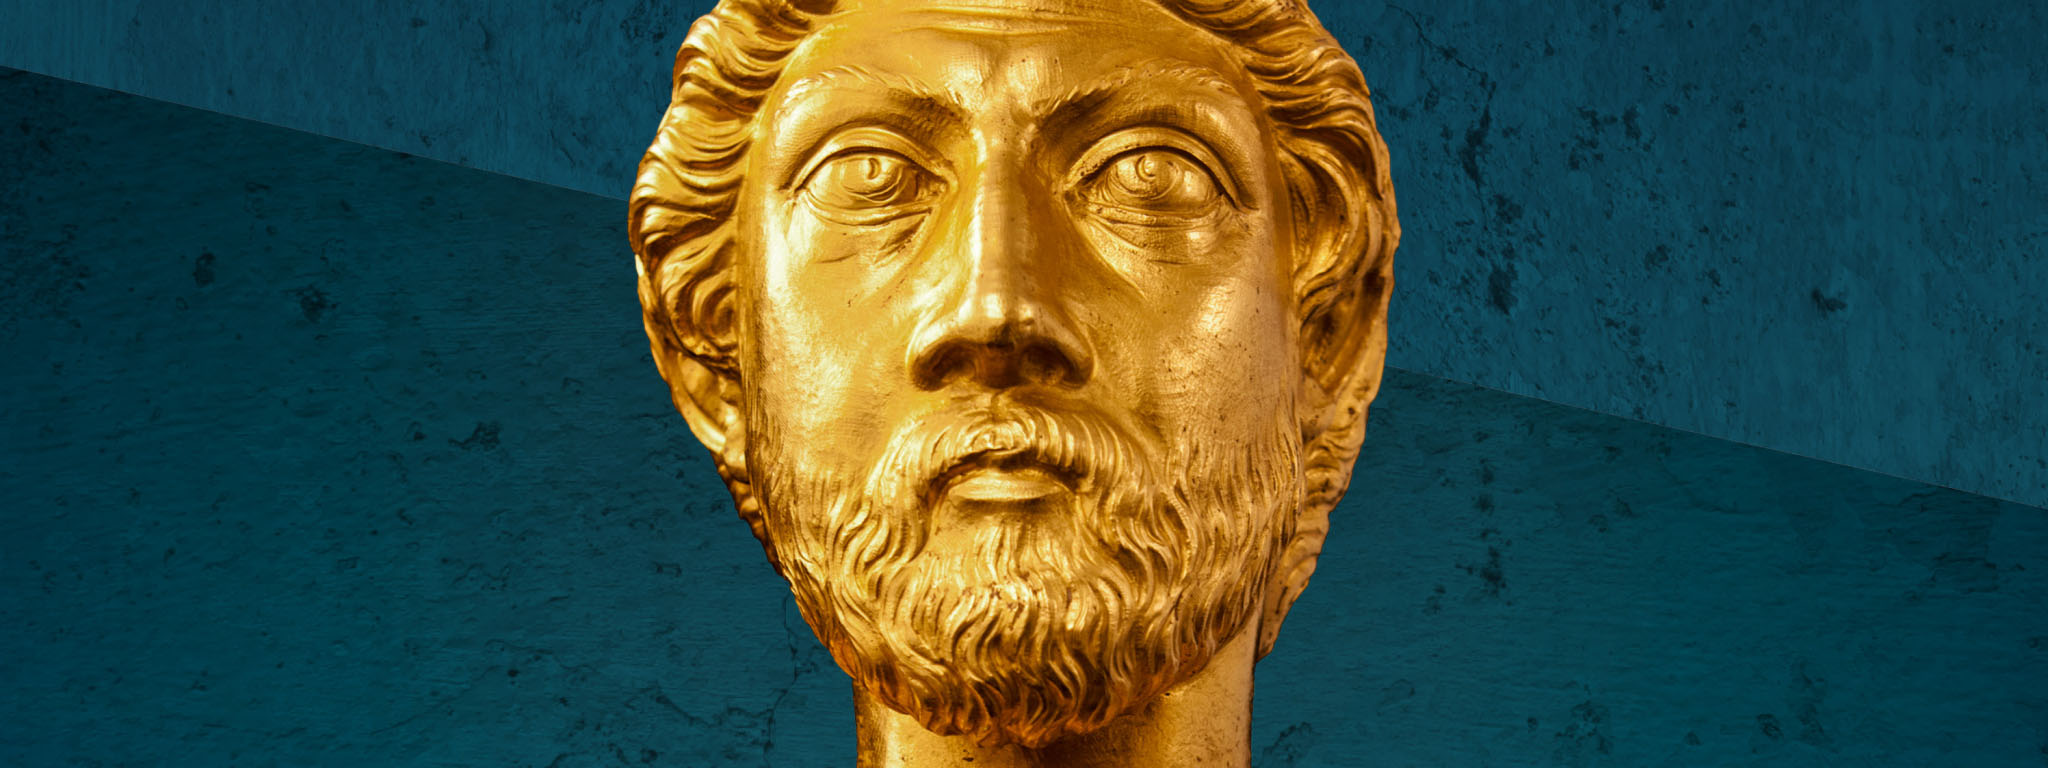 The Gold Emperor from Aventicum